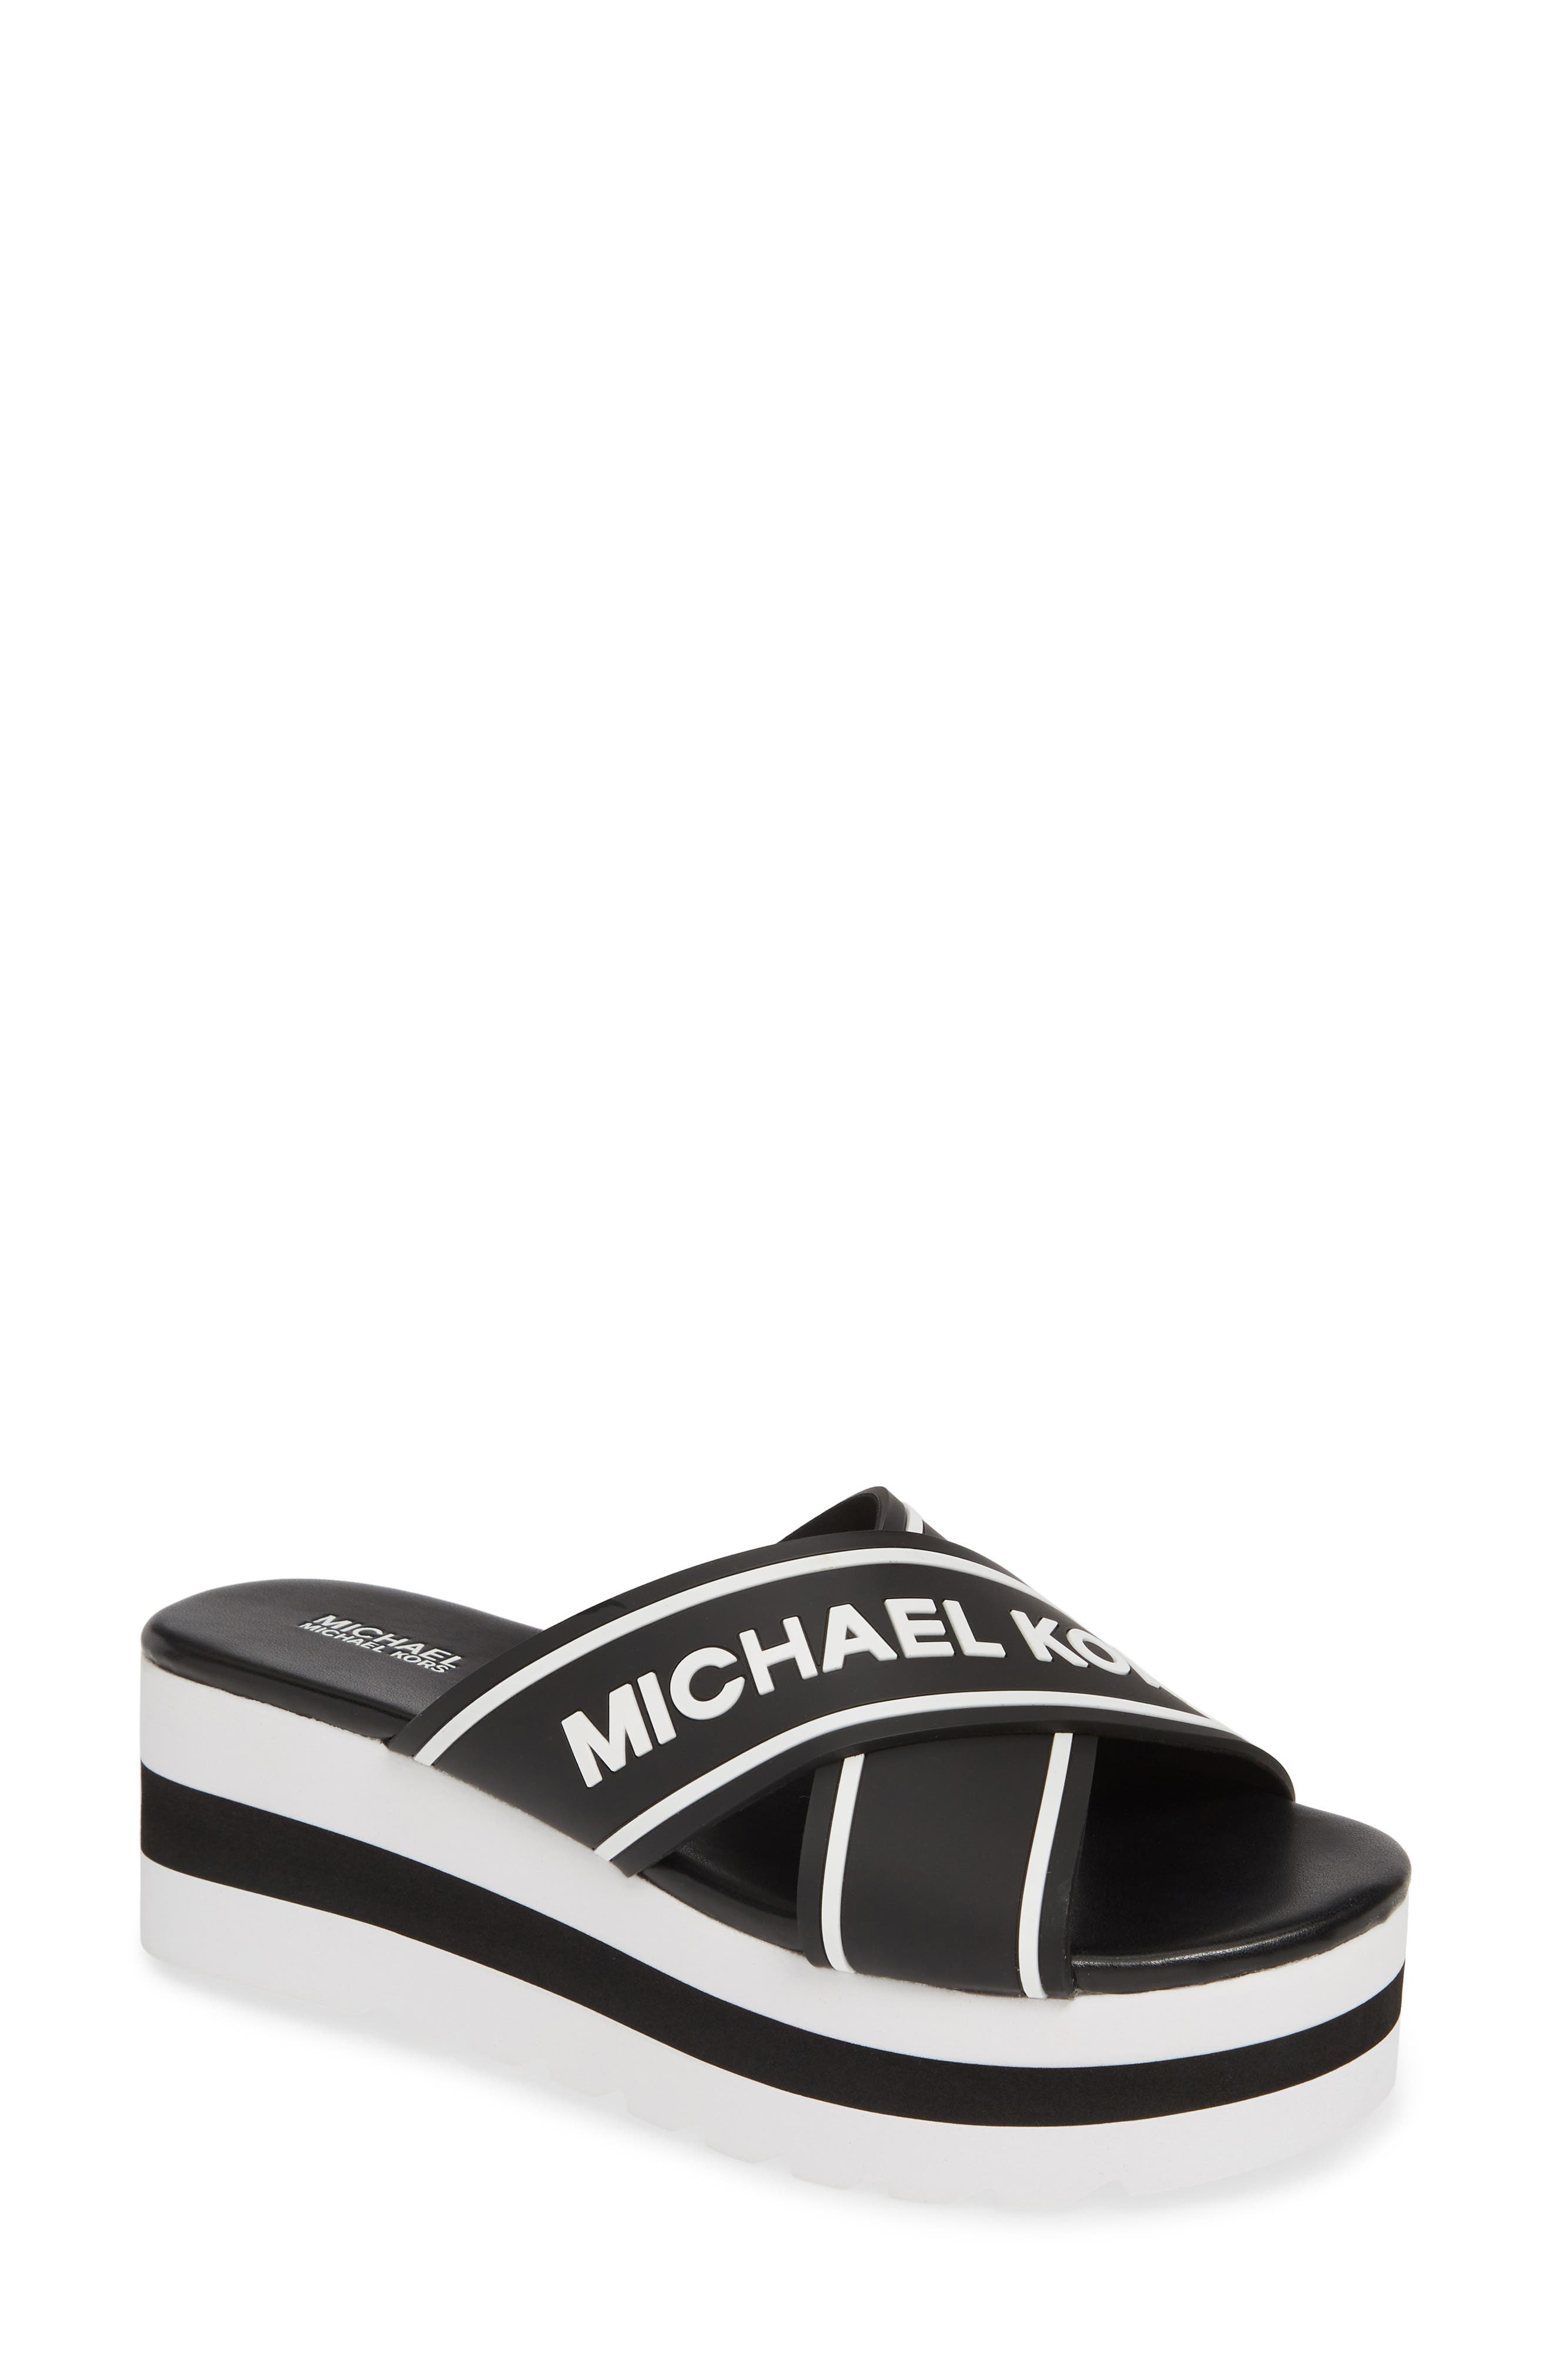 michael kors slippers womens 2015